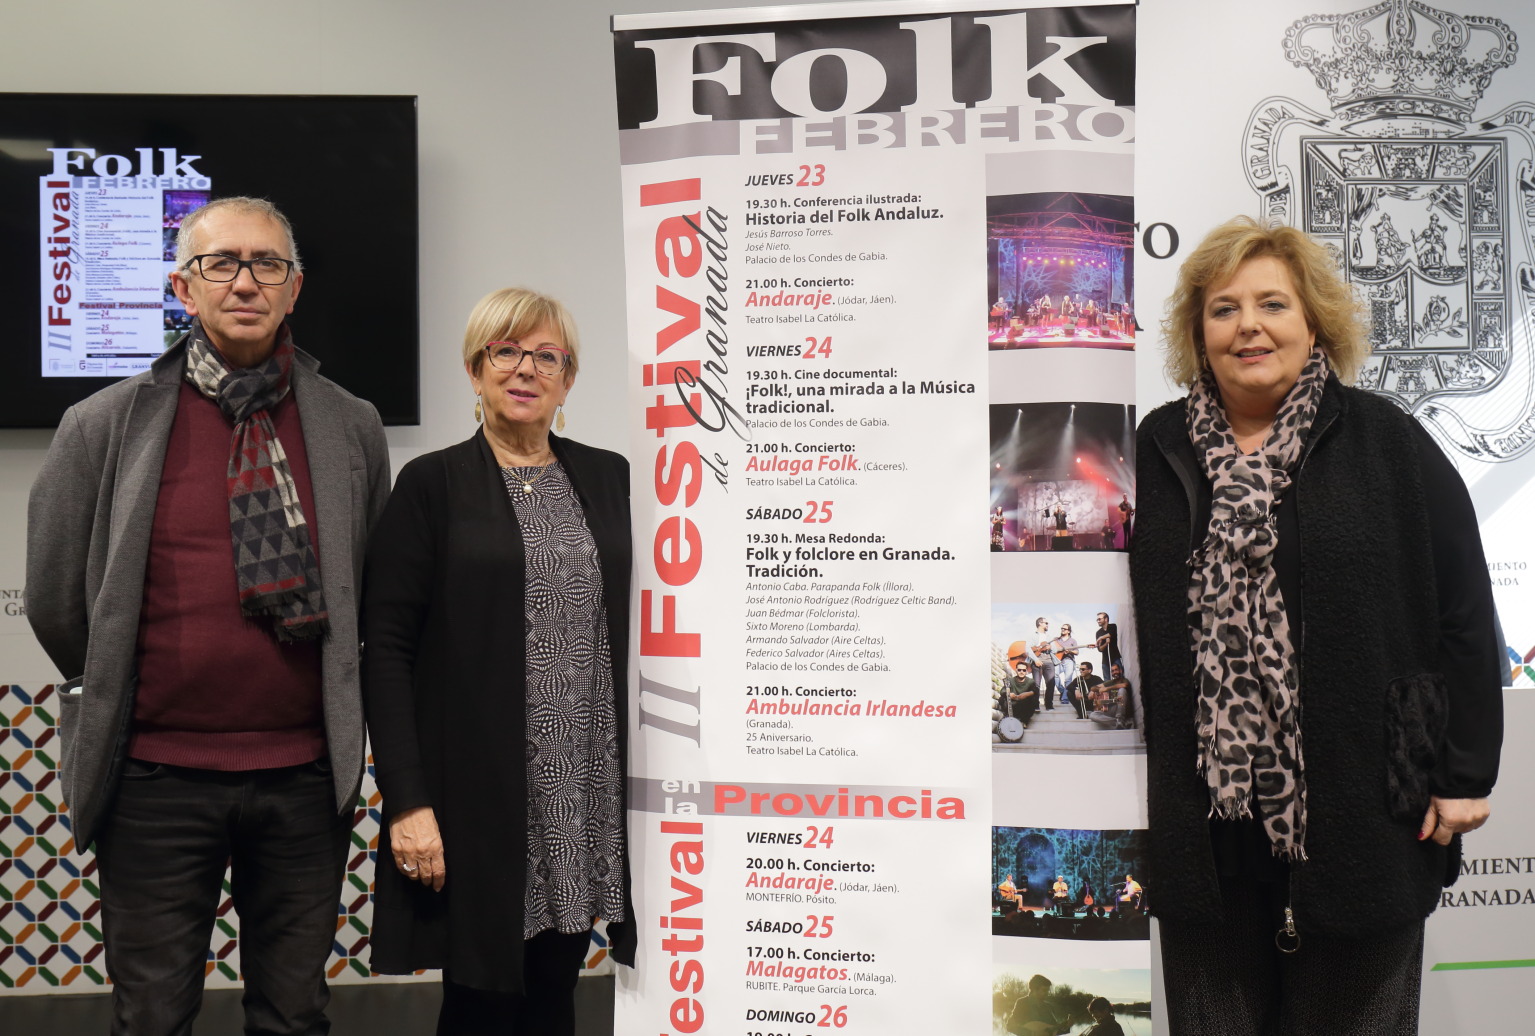 La musica tradicional se da cita en Granada del 23 al 26 de febrero en el Festival de Música Folk